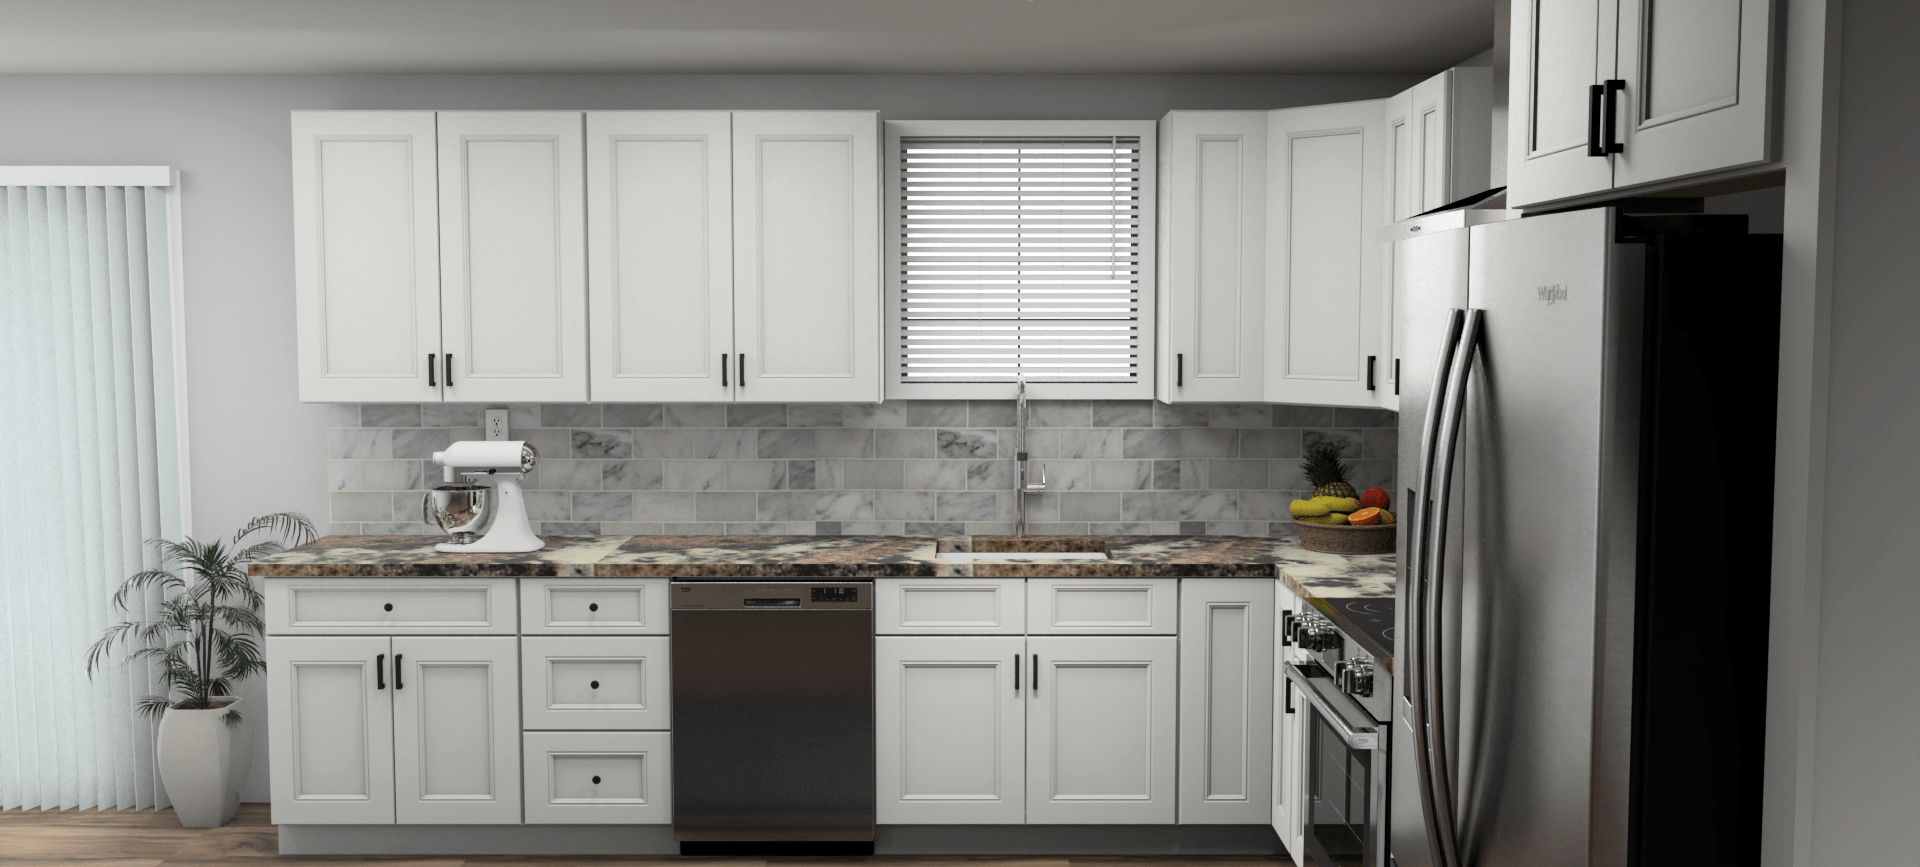 Fabuwood Allure Nexus Frost 12 x 12 L Shaped Kitchen Side Layout Photo